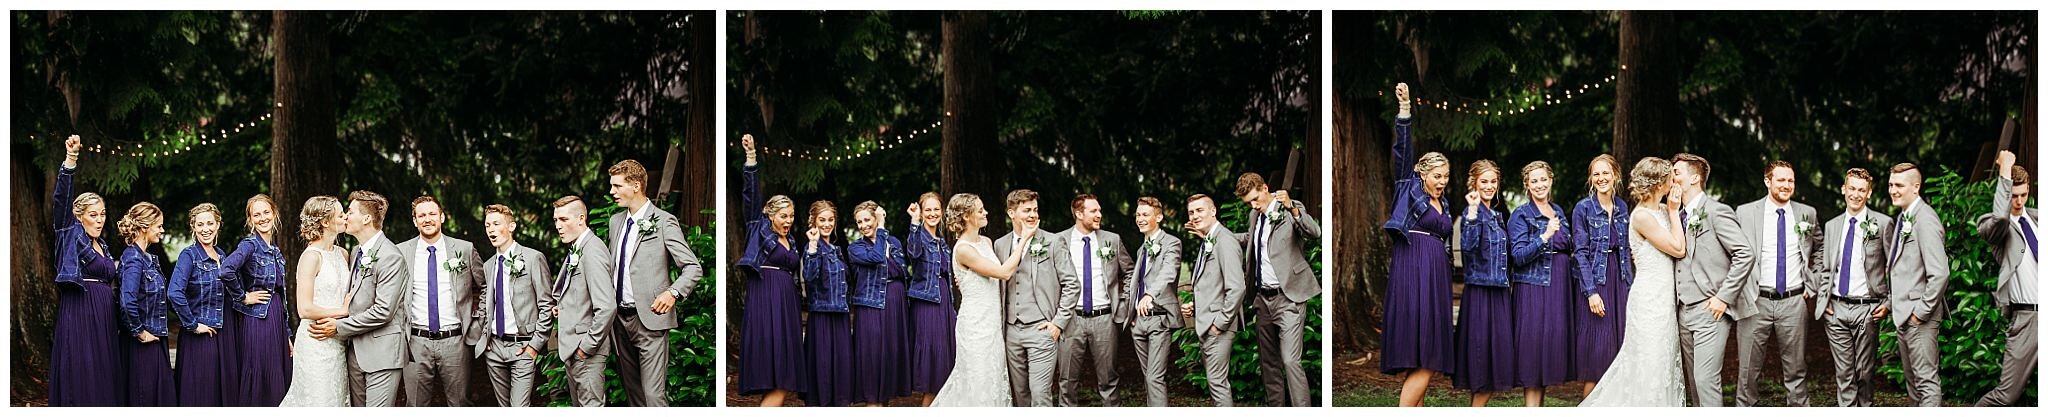 Backyard-Wedding-Party-Langley-Photographer (12).jpg